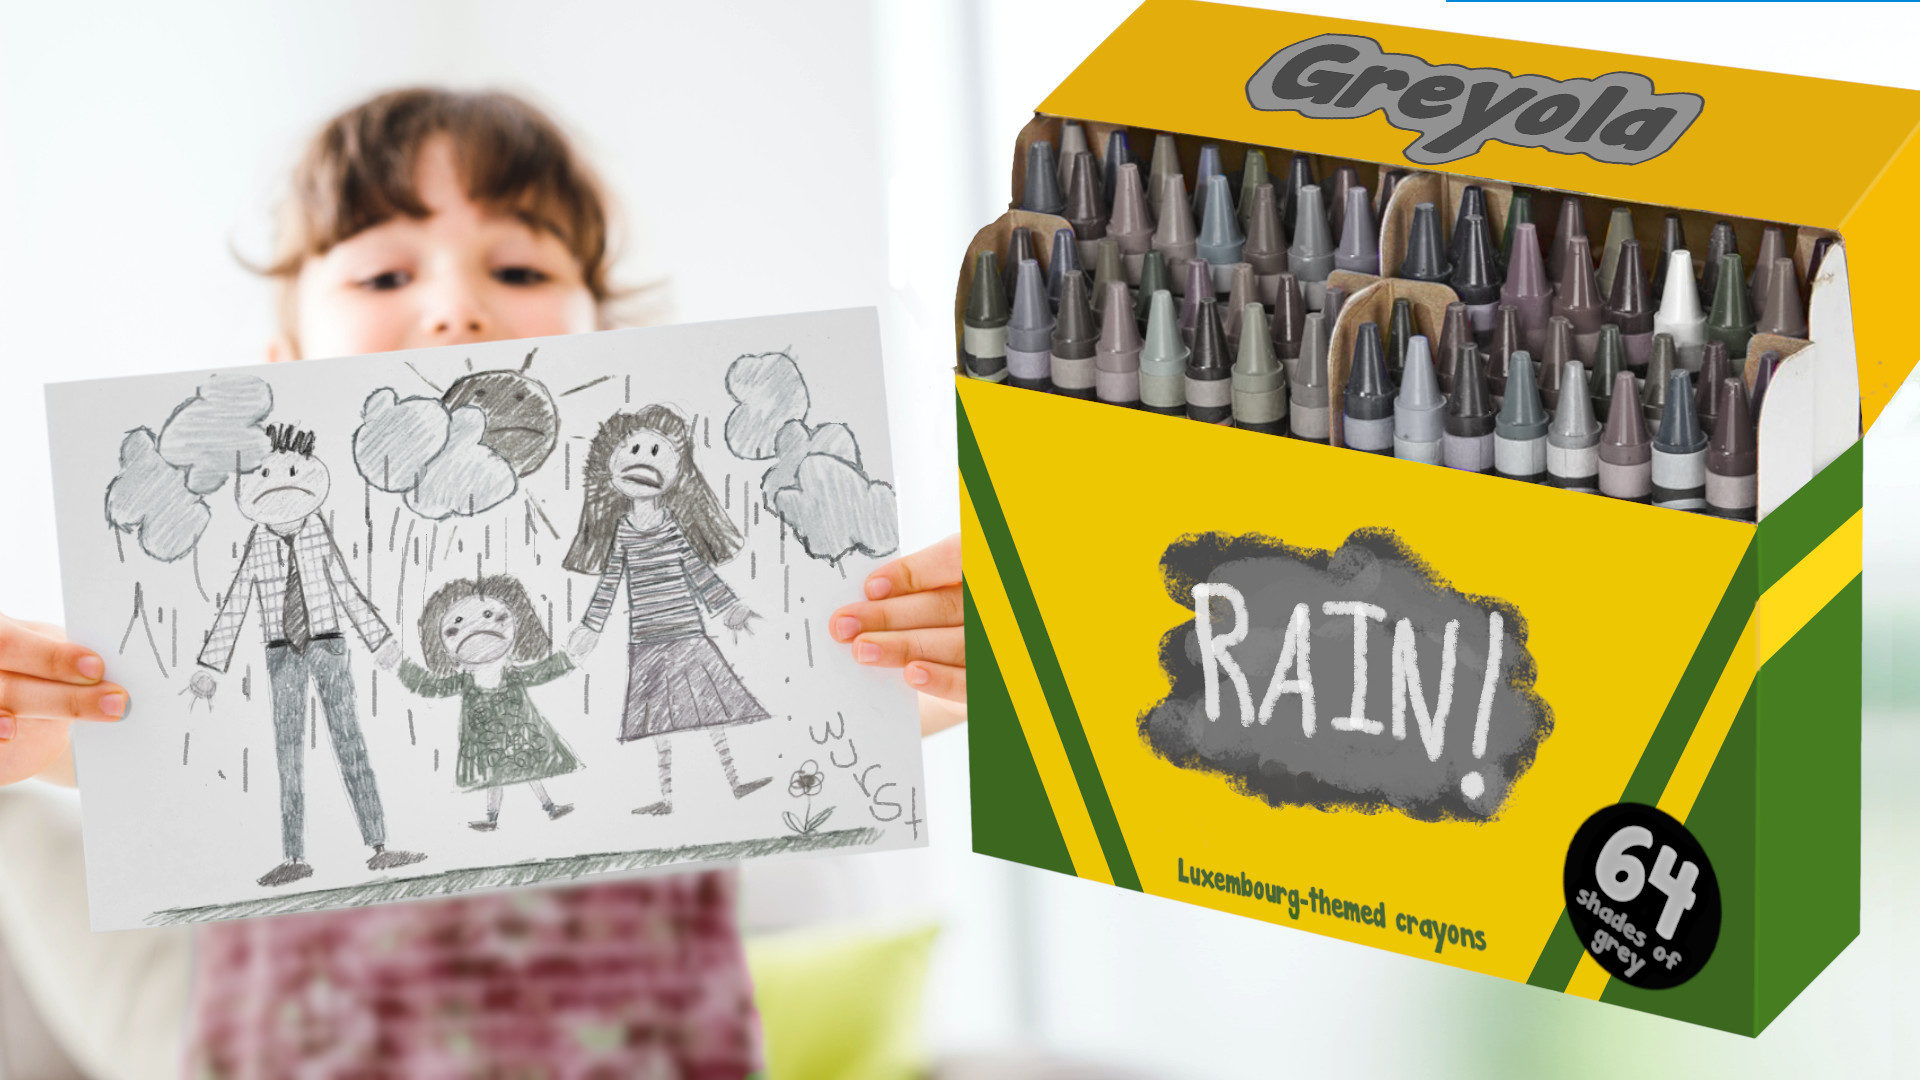 Grayola gray crayons